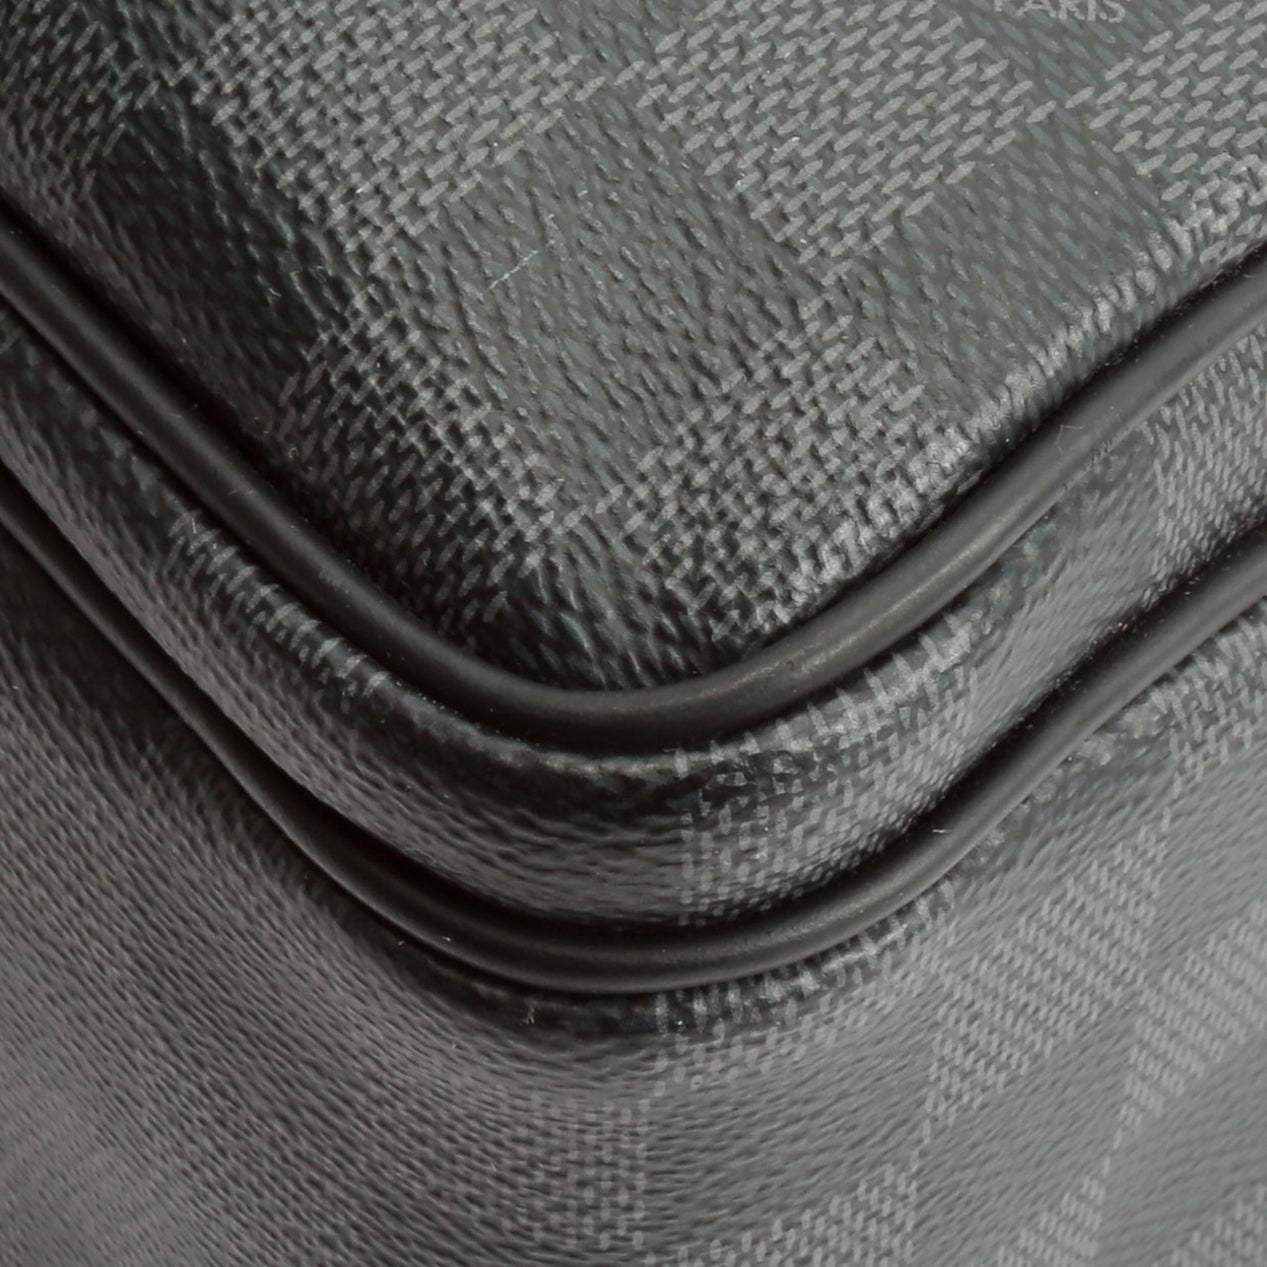 LOUIS VUITTON SHW Icare Briefcase Shoulder Handbag N23253 Damier Graphite  Black